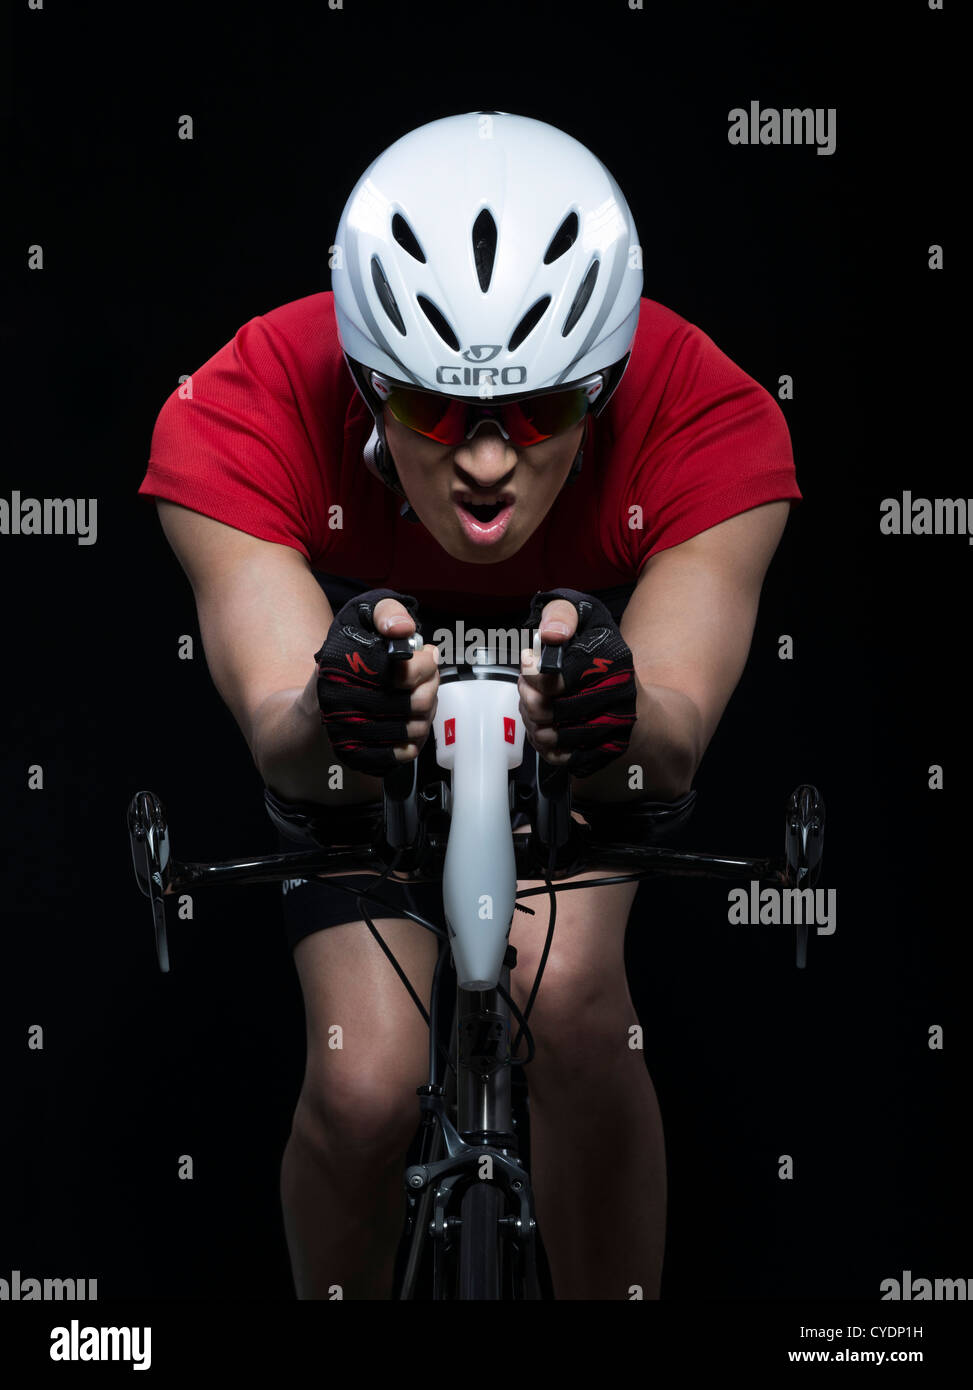 Triatleta / Time Trial racer en bicicleta llevar casco aero Foto de stock